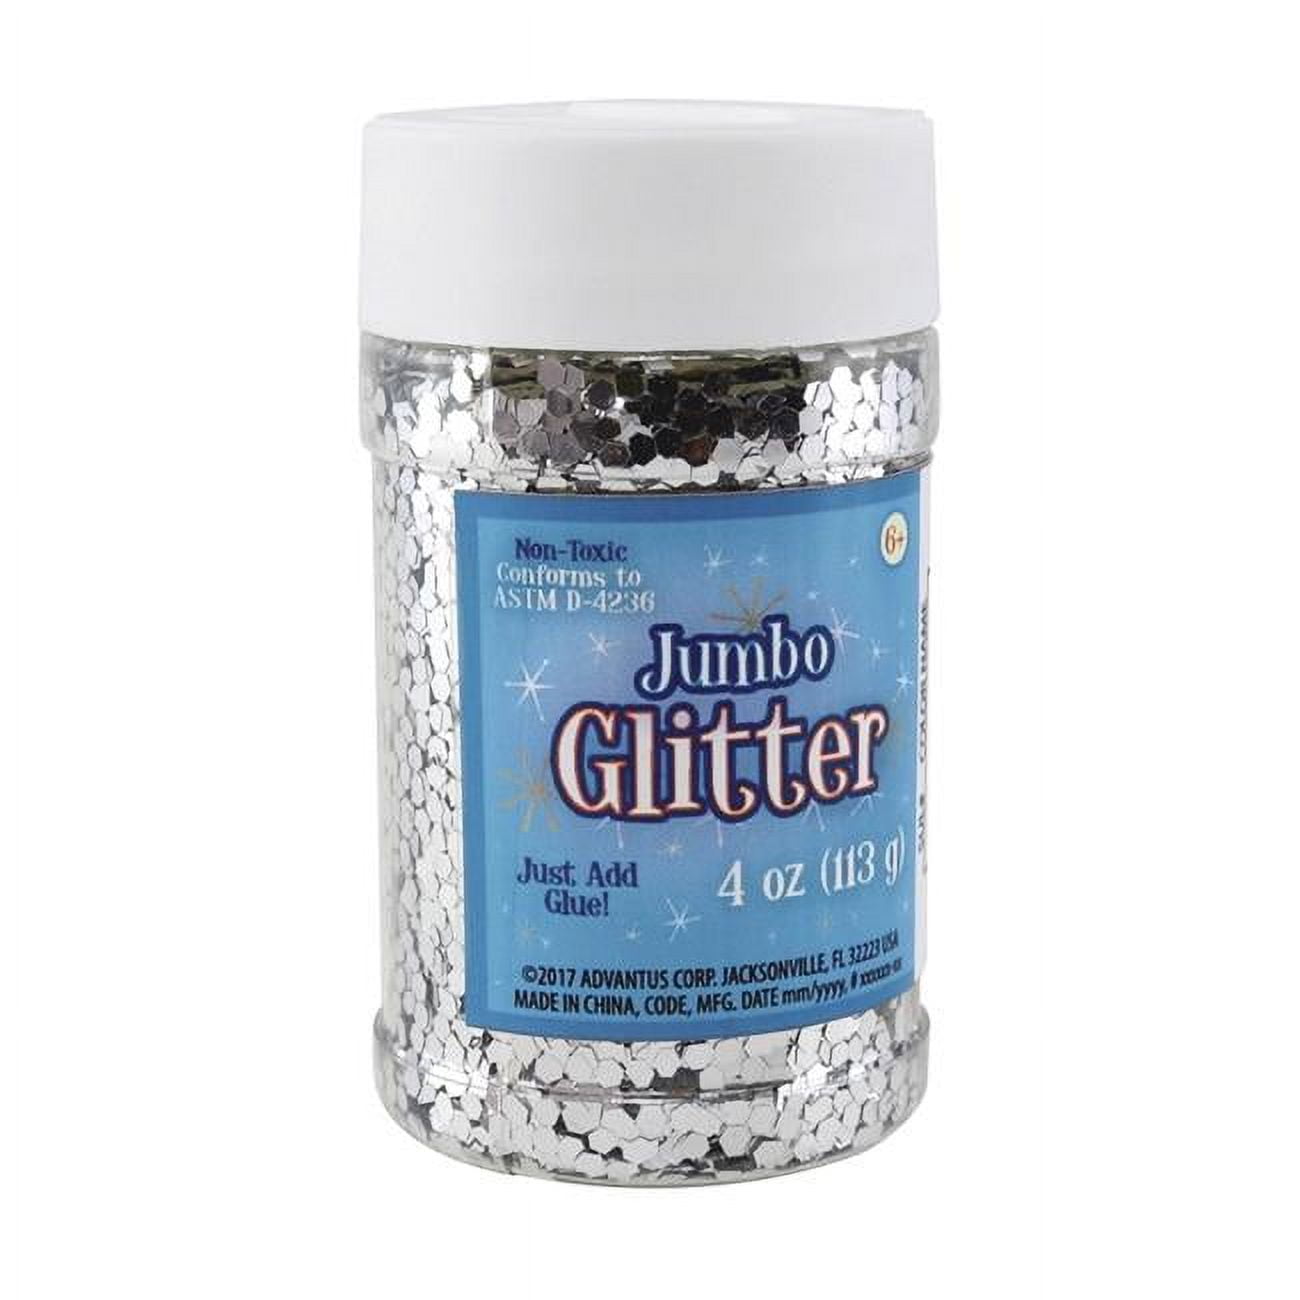 Sulyn 2.5 Oz. Jumbo Multi Glitter – Walmart Inventory Checker – BrickSeek